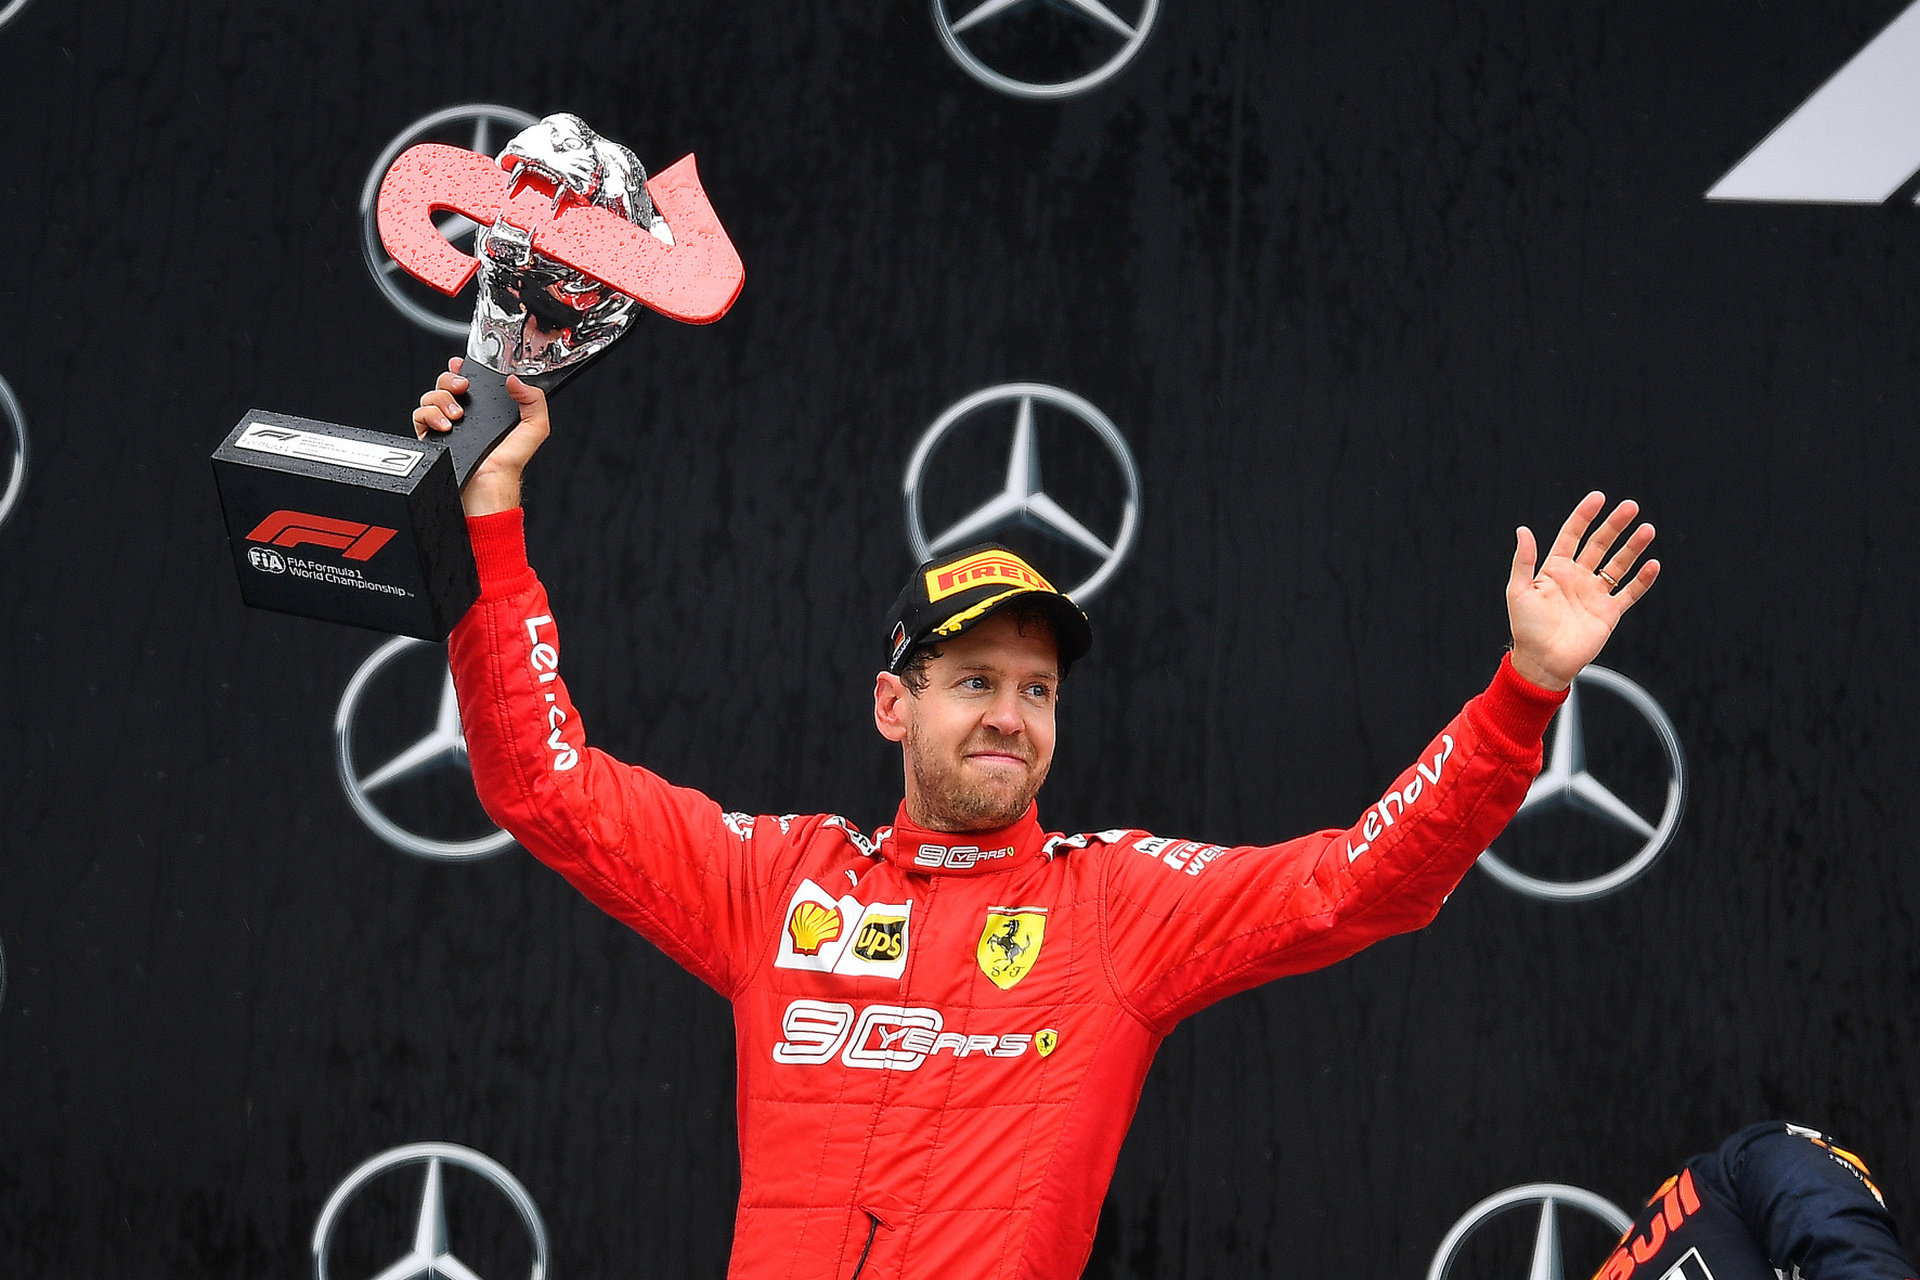 Der Heppenheimer Sebastian Vettel wechselt 2021 zum Aston Martin-Team